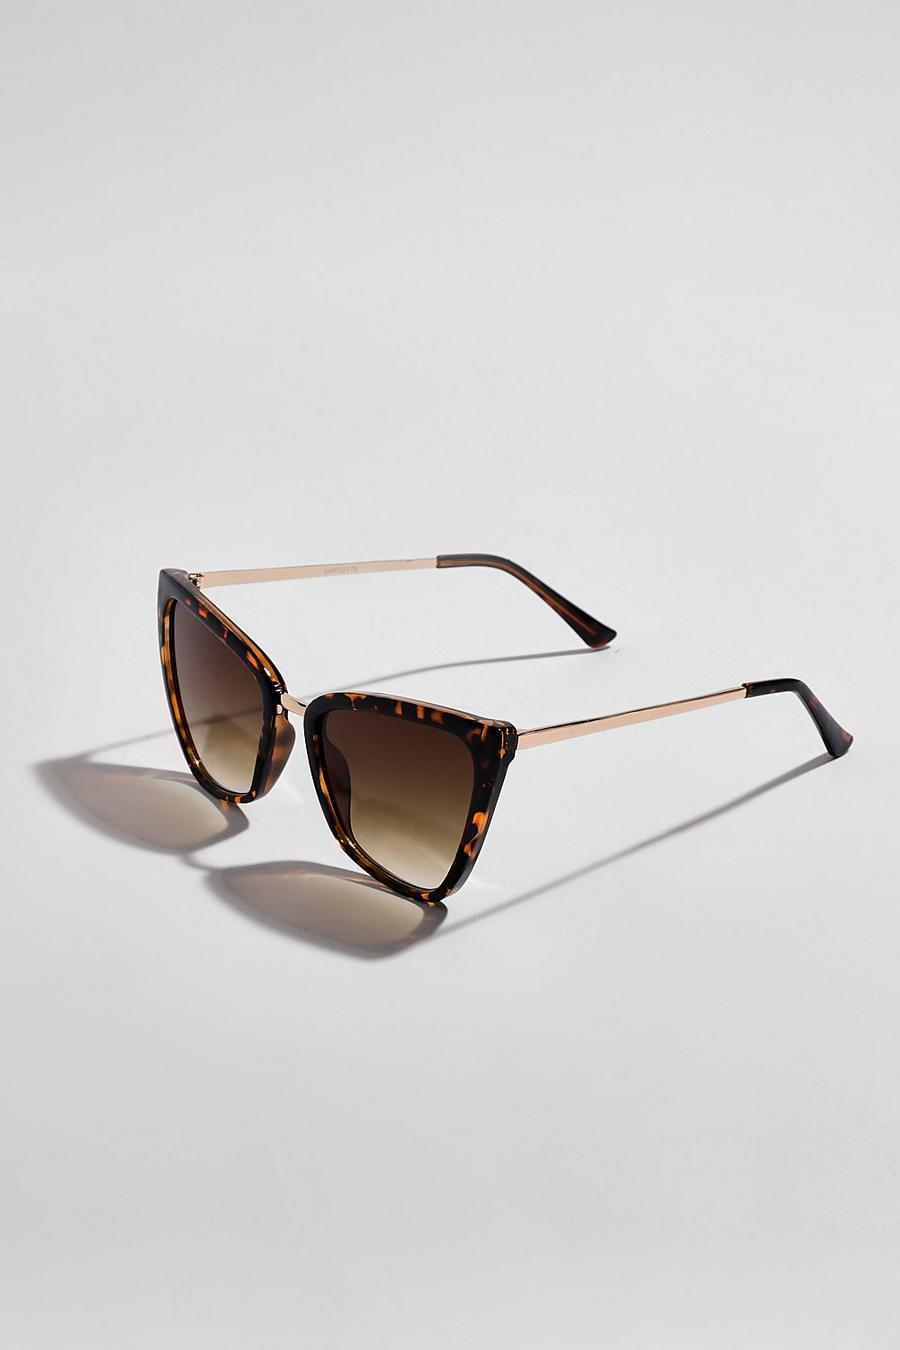 Cream transparent visor sunglasses